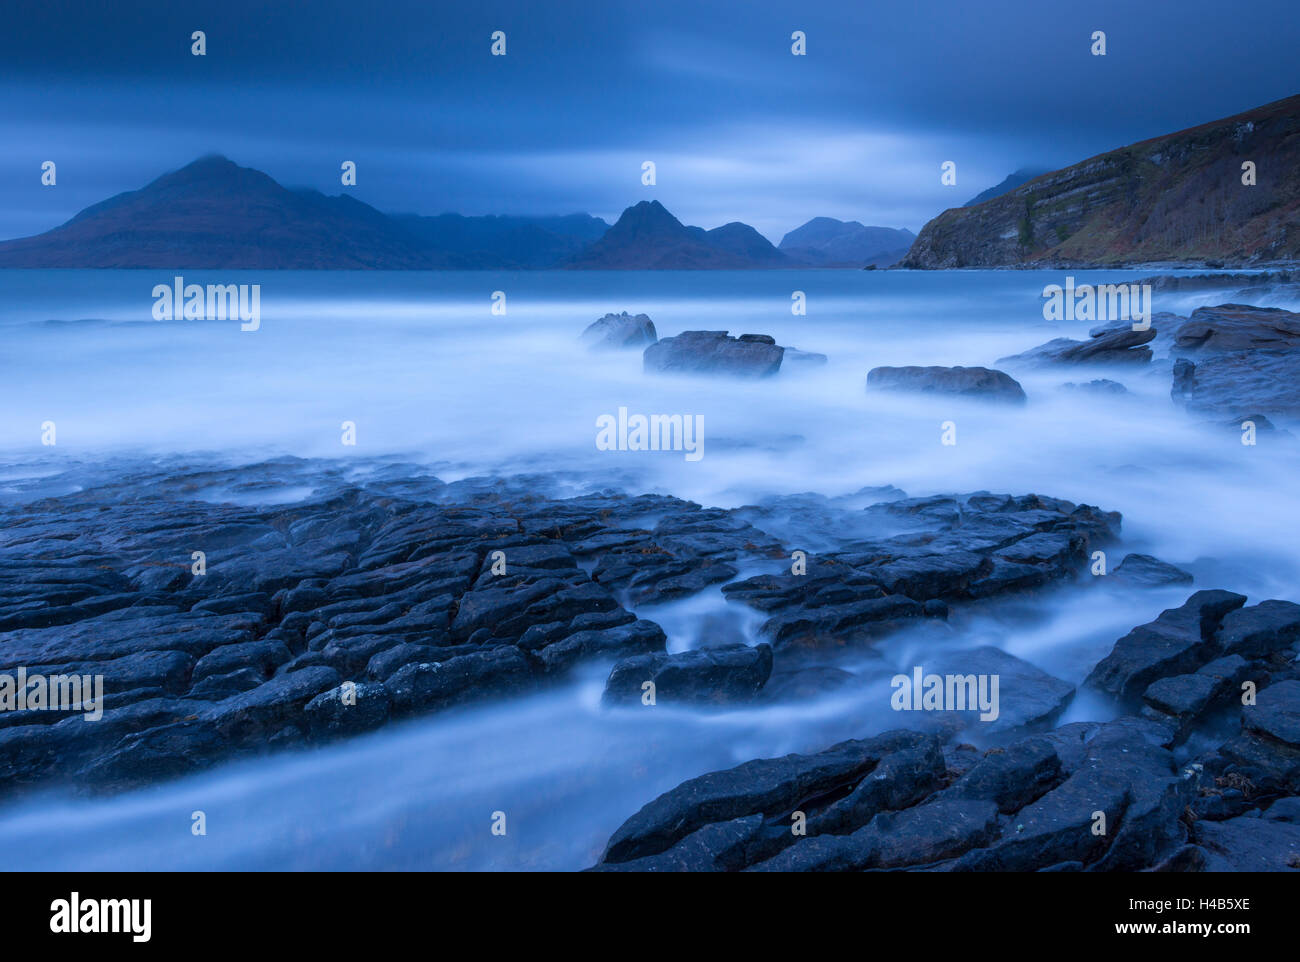 Twilight on the rocky coast of Elgol, looking across to the Cuillin mountains, Isle of Skye, Scotland. Autumn (November) 2012. Stock Photo